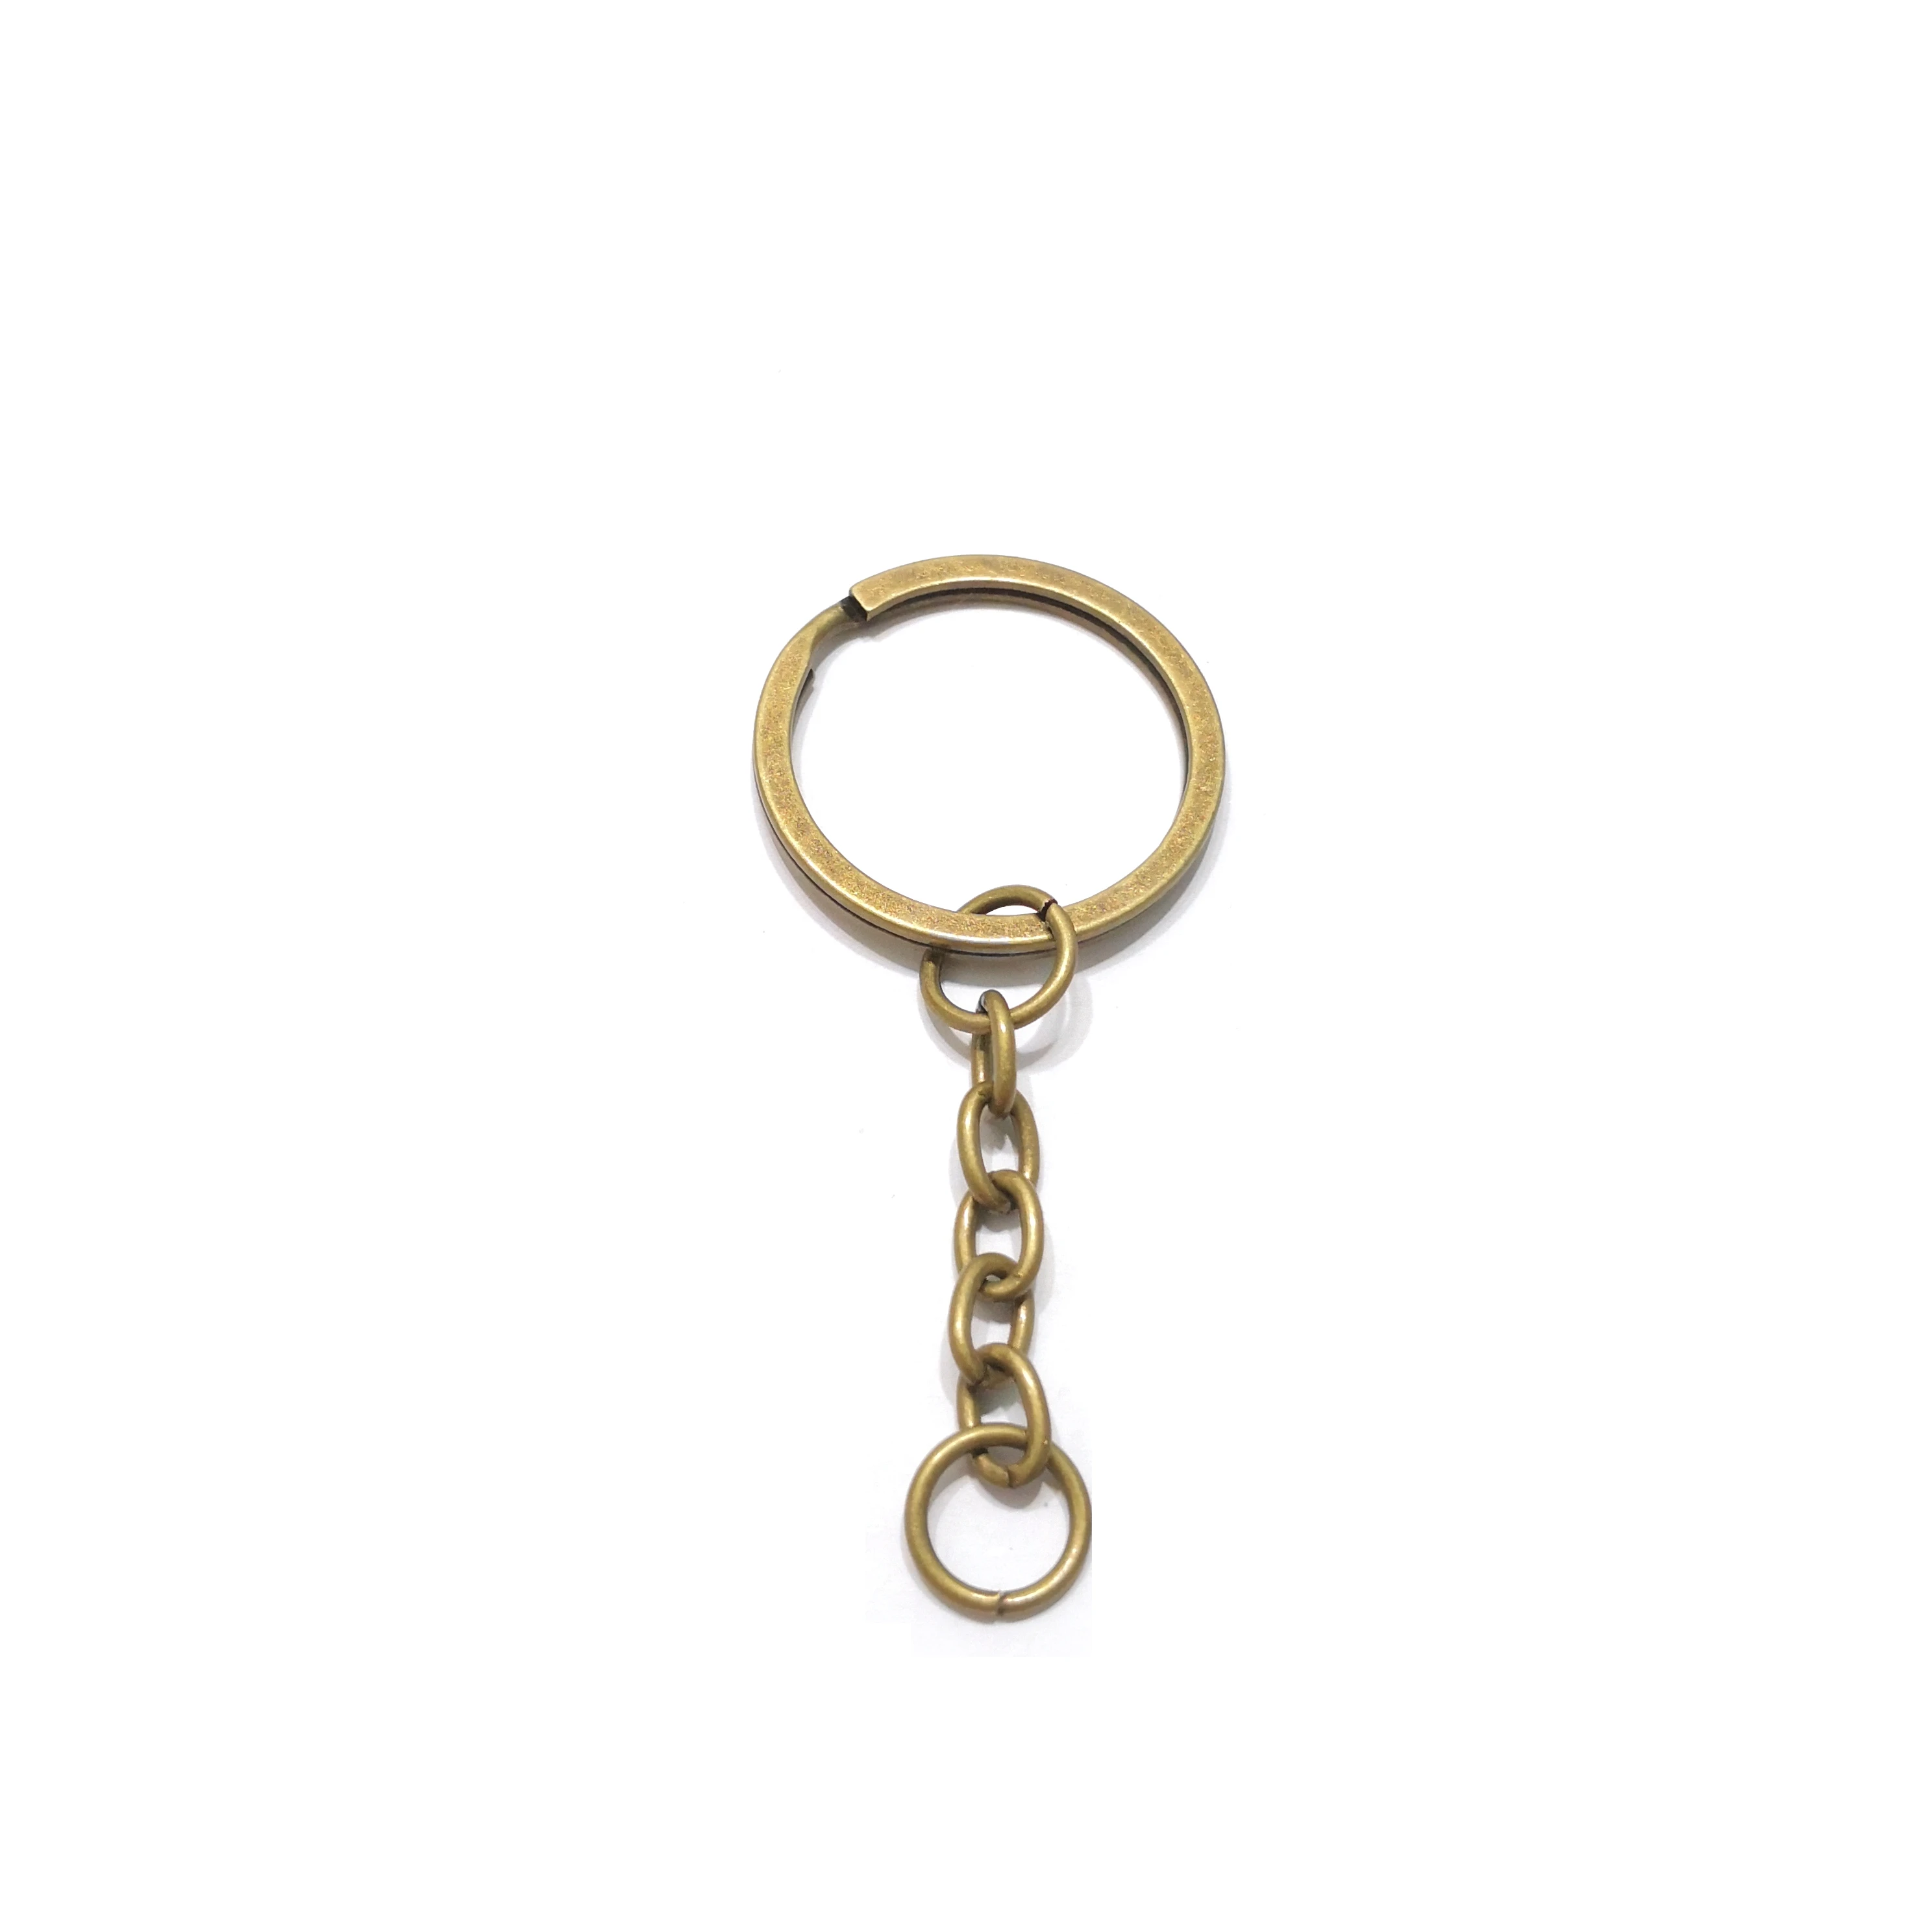 20/30 pcs/lot Key Chain Key Ring Bronze Rhodium Gold Color 28mm